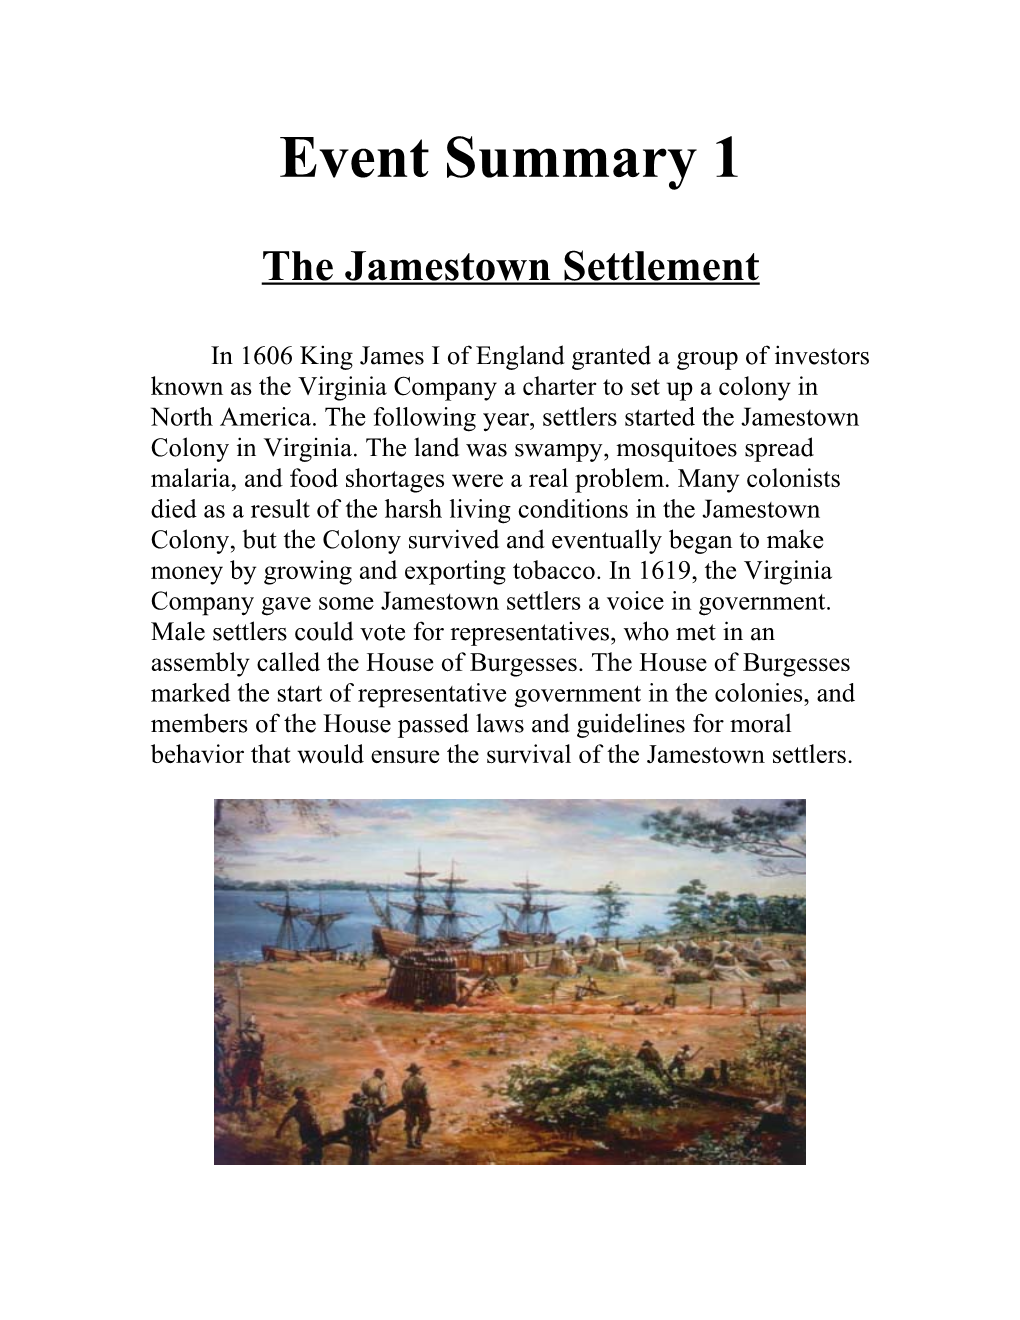 The Jamestown Settlement